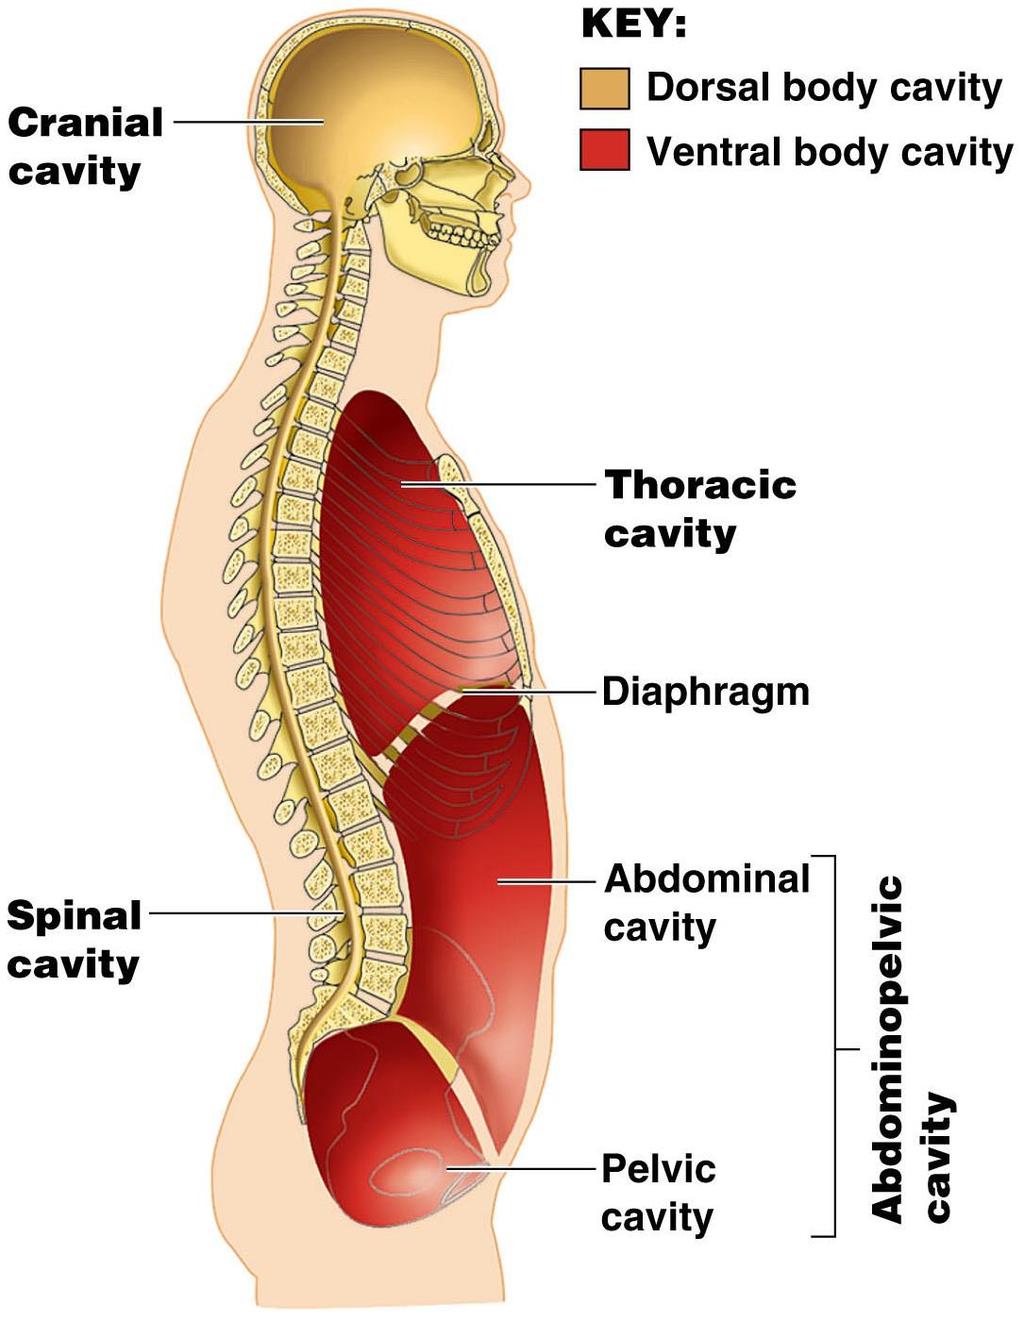 Body Cavities Dorsal body cavity Cranial cavity houses the brain Spinal cavity houses the spinal cord Ventral body cavity